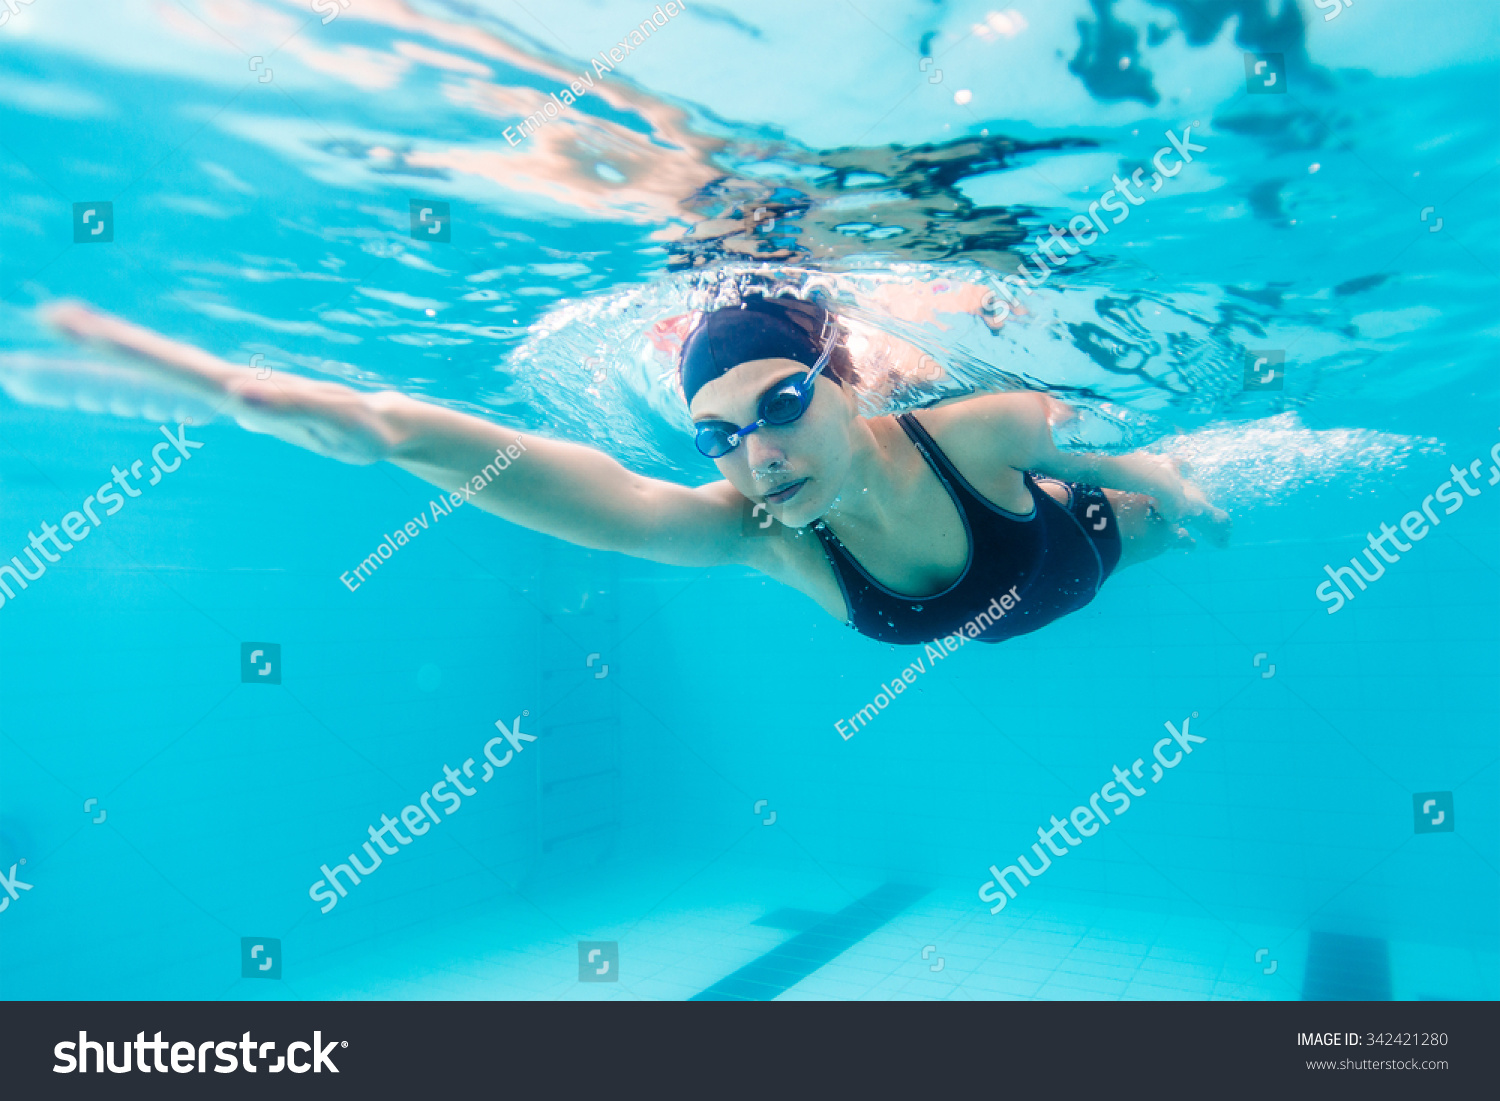 Female swimmer gushing through water in pool #342421280